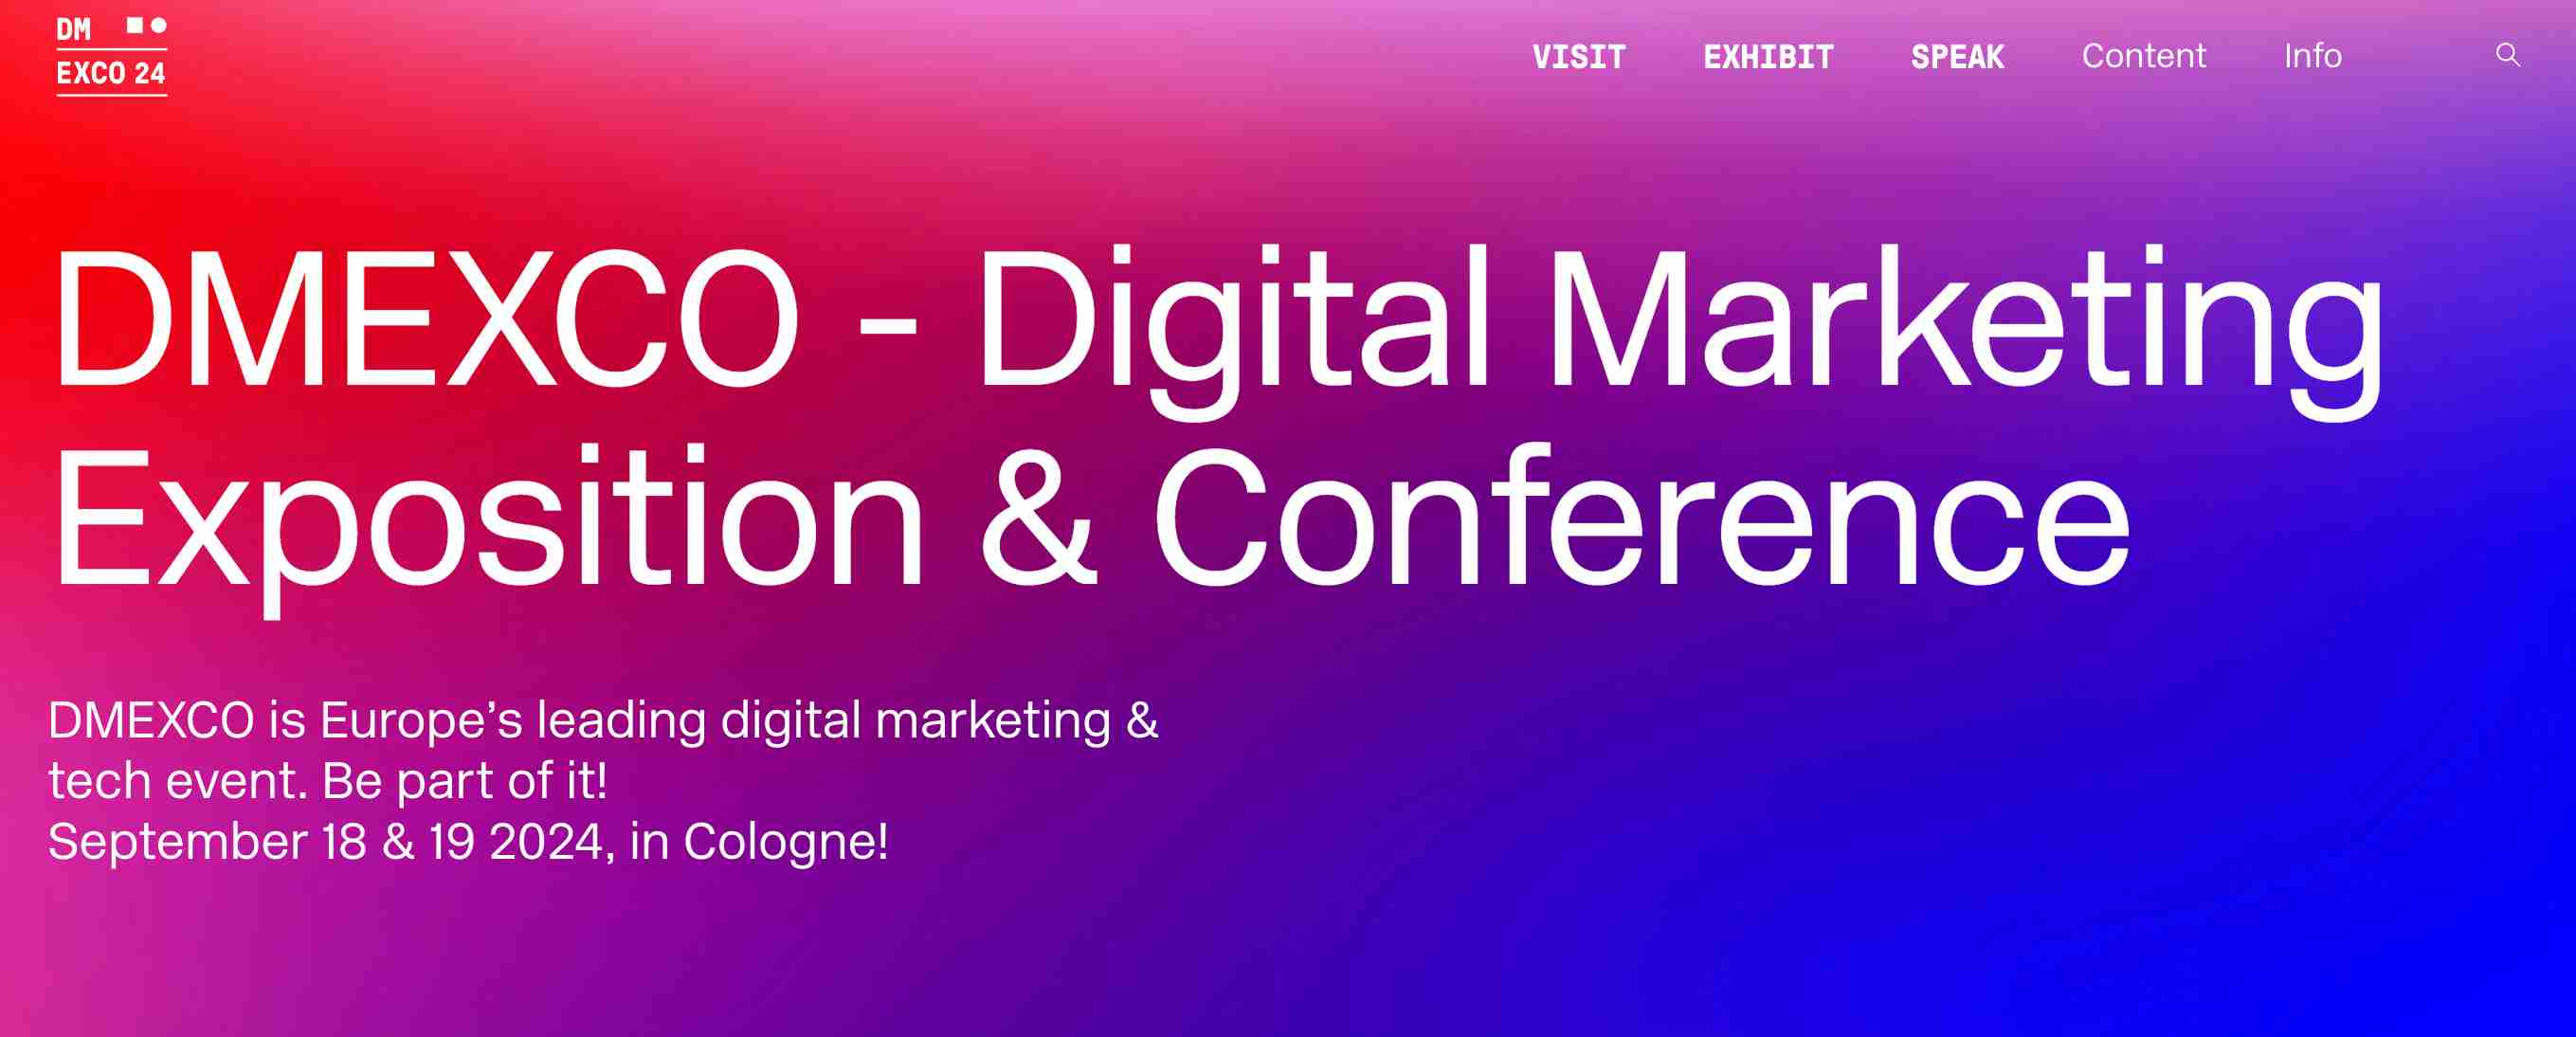 Digital marketing conferences: DMEXCO